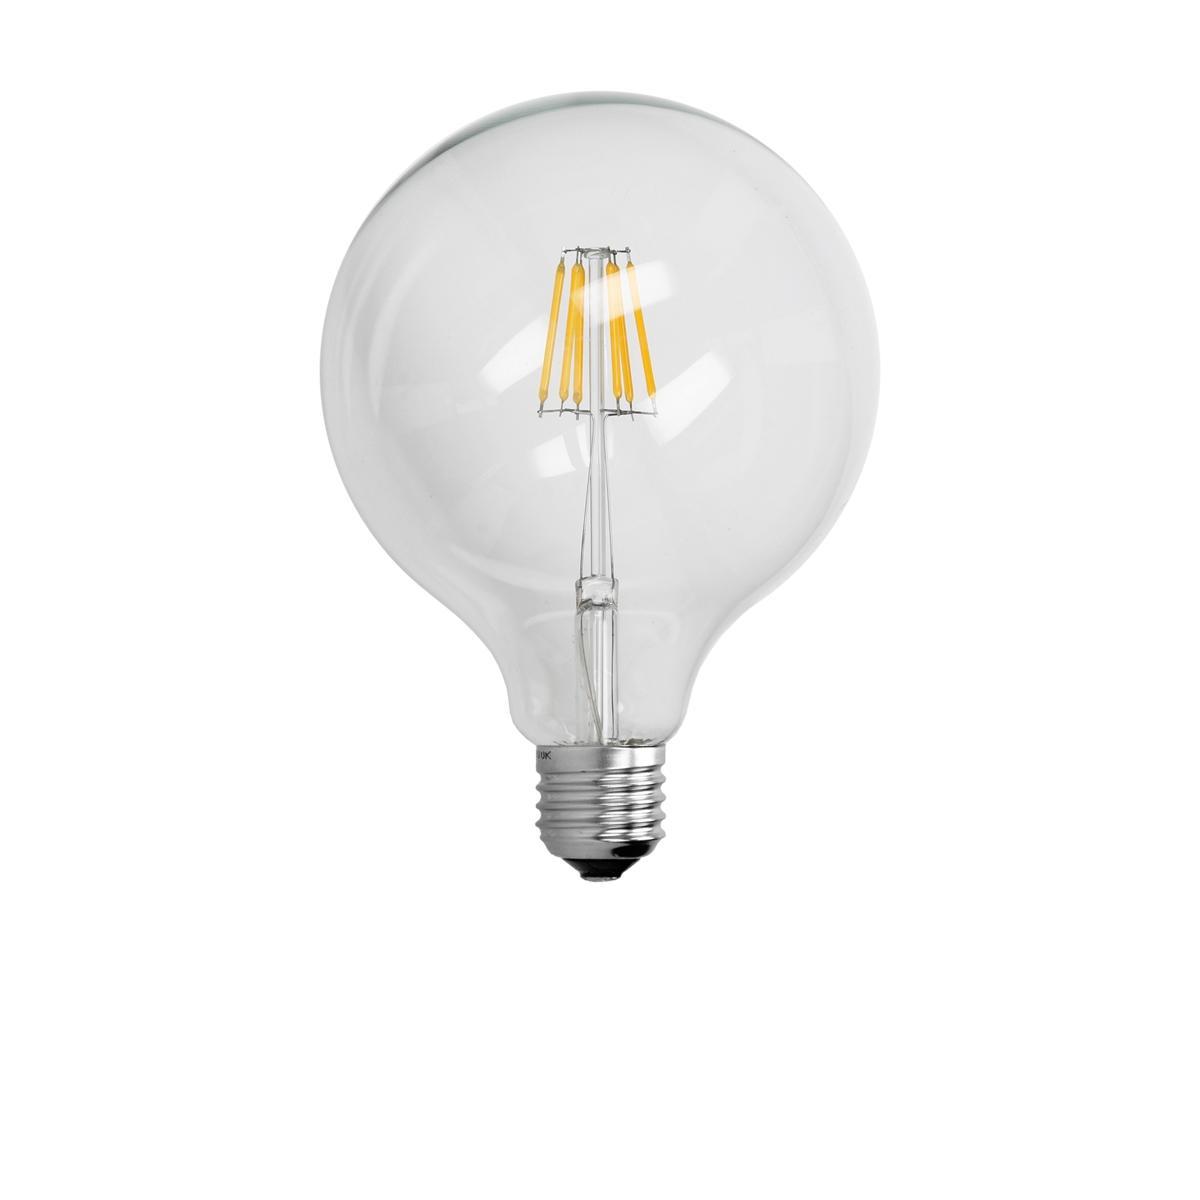 ECD Germany Aseta 2 LED-lamppu hehkulanka - E27 - Edison - 8W - mm 125-816  Lumen - Gigantti verkkokauppa